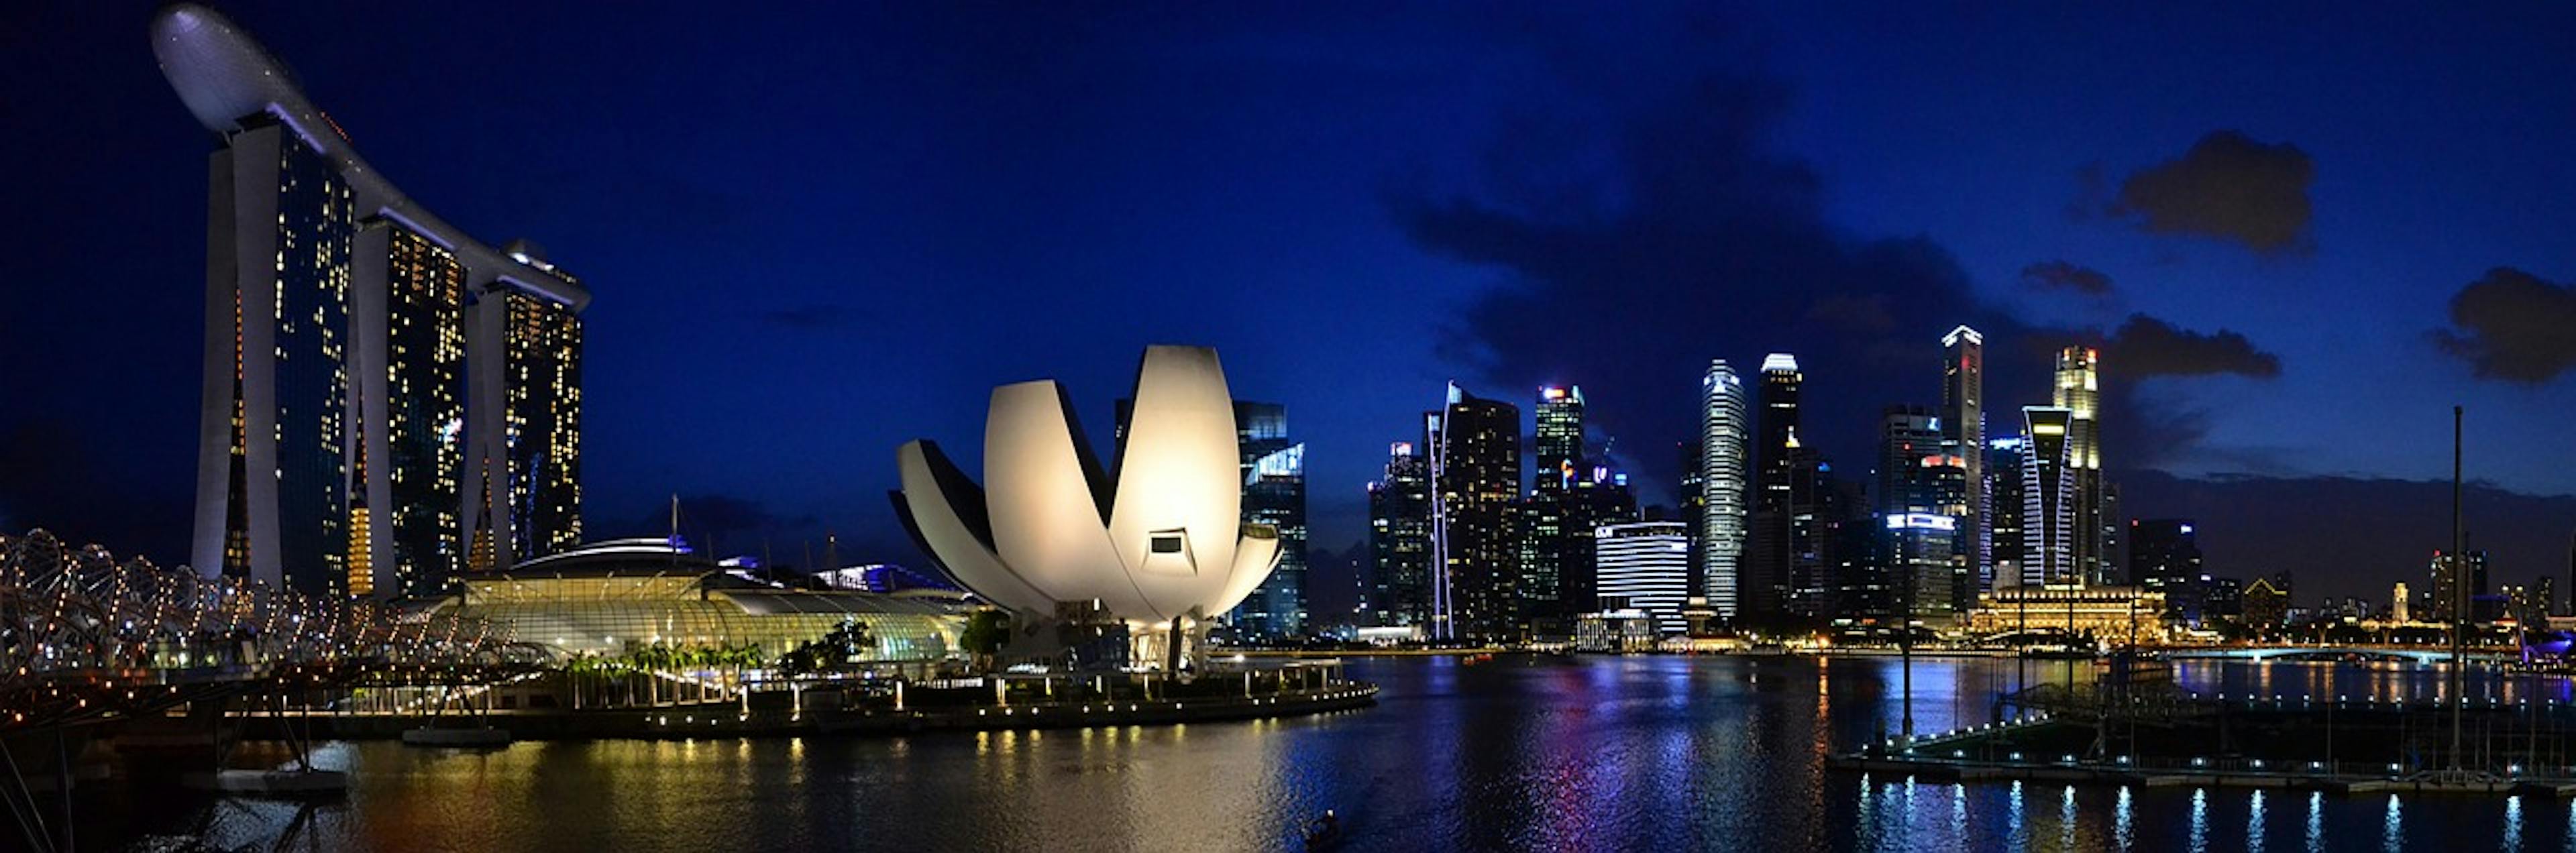 Überblick über die Stadt Singapur